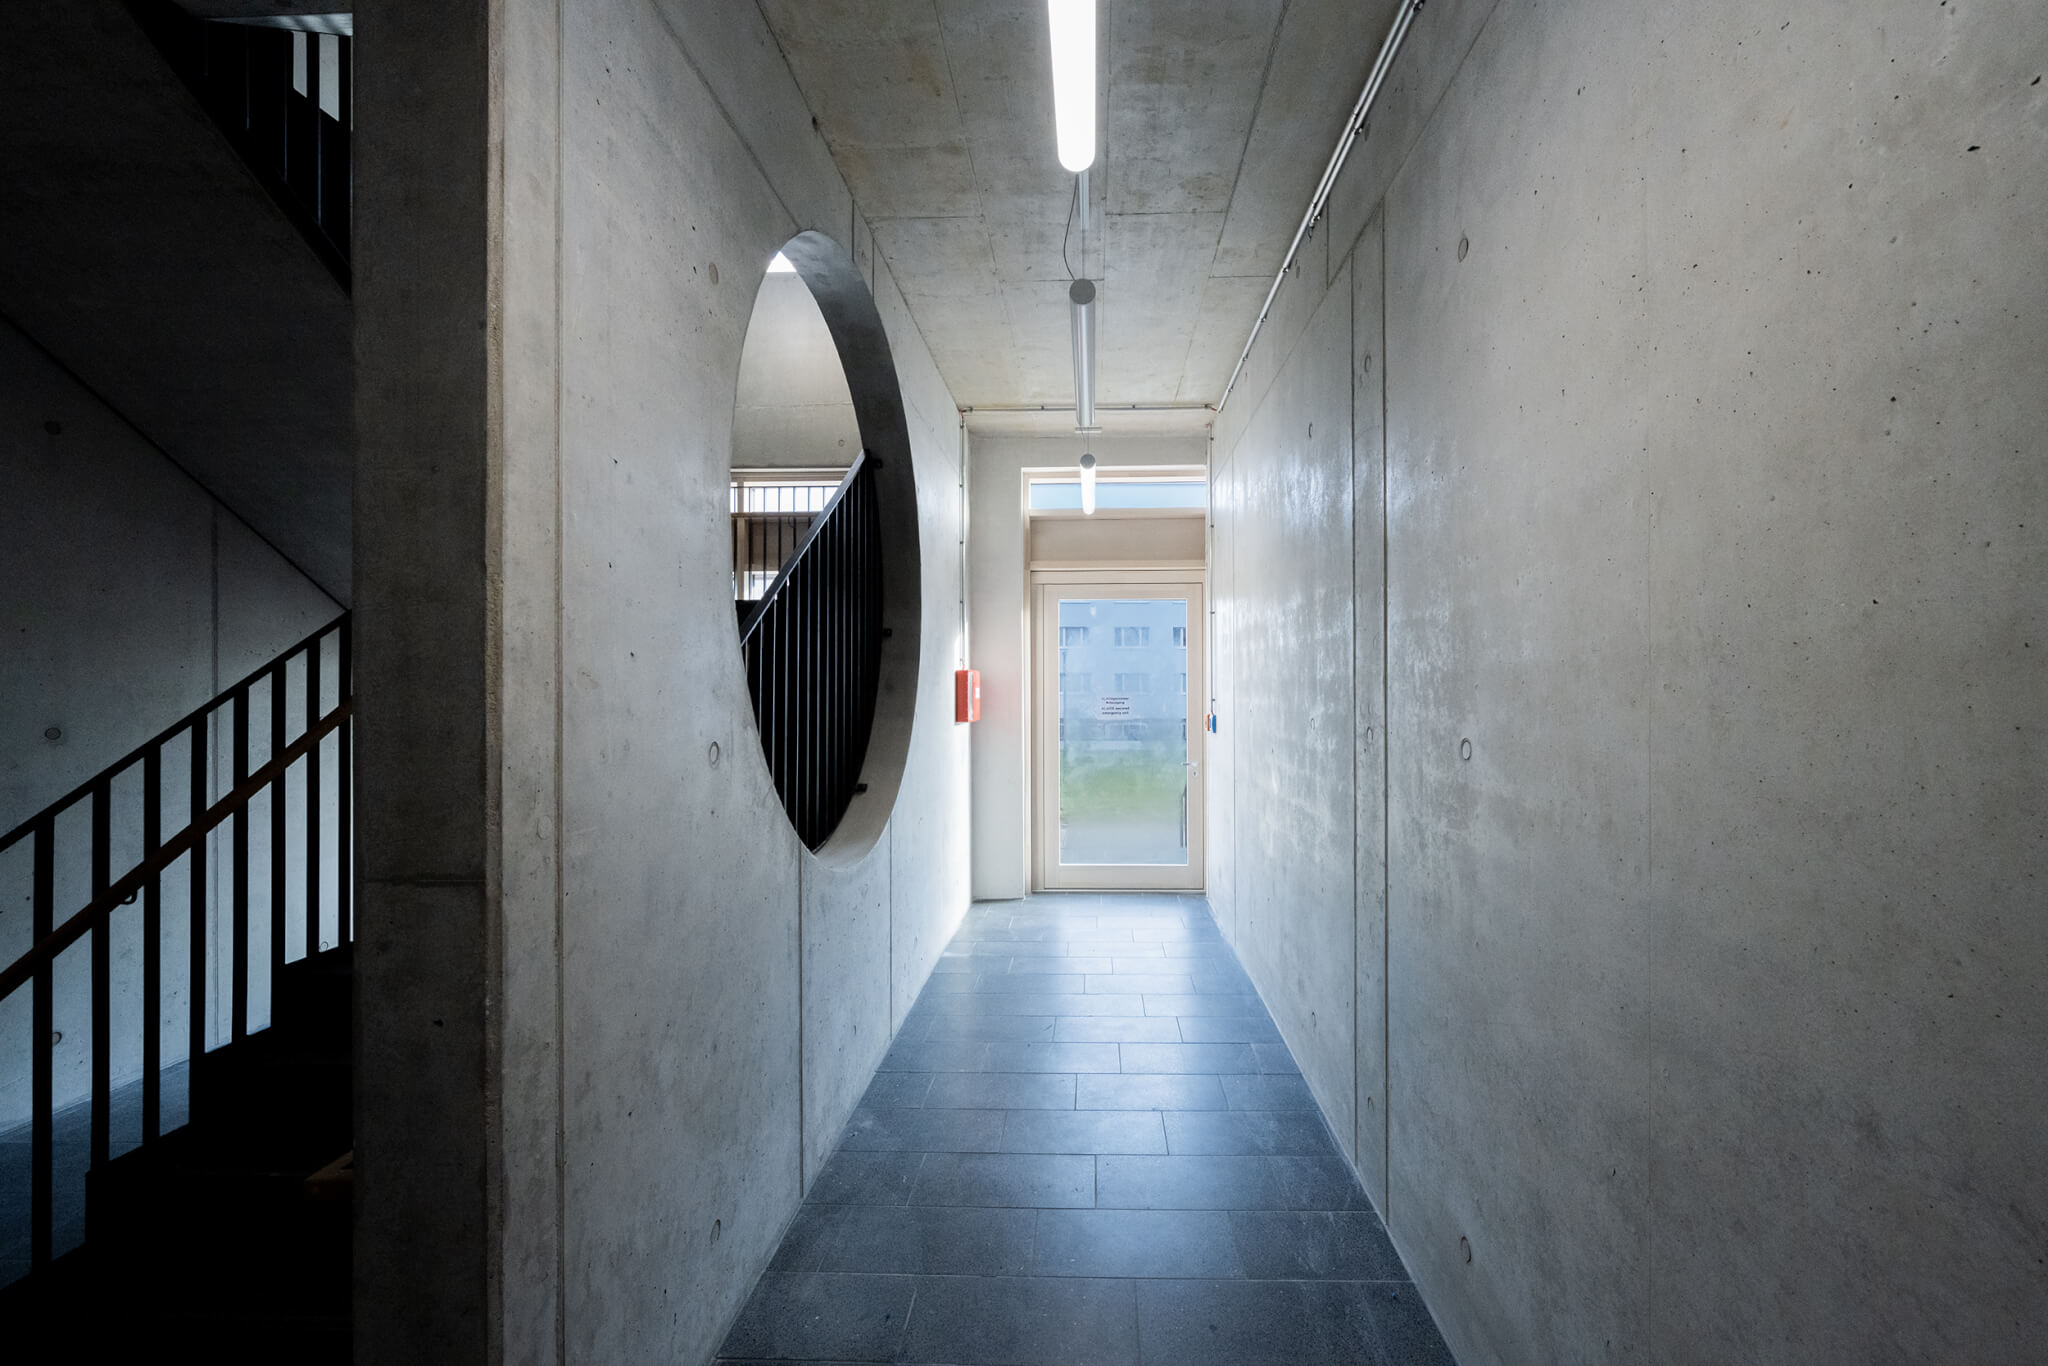 concrete hallway in an academic building